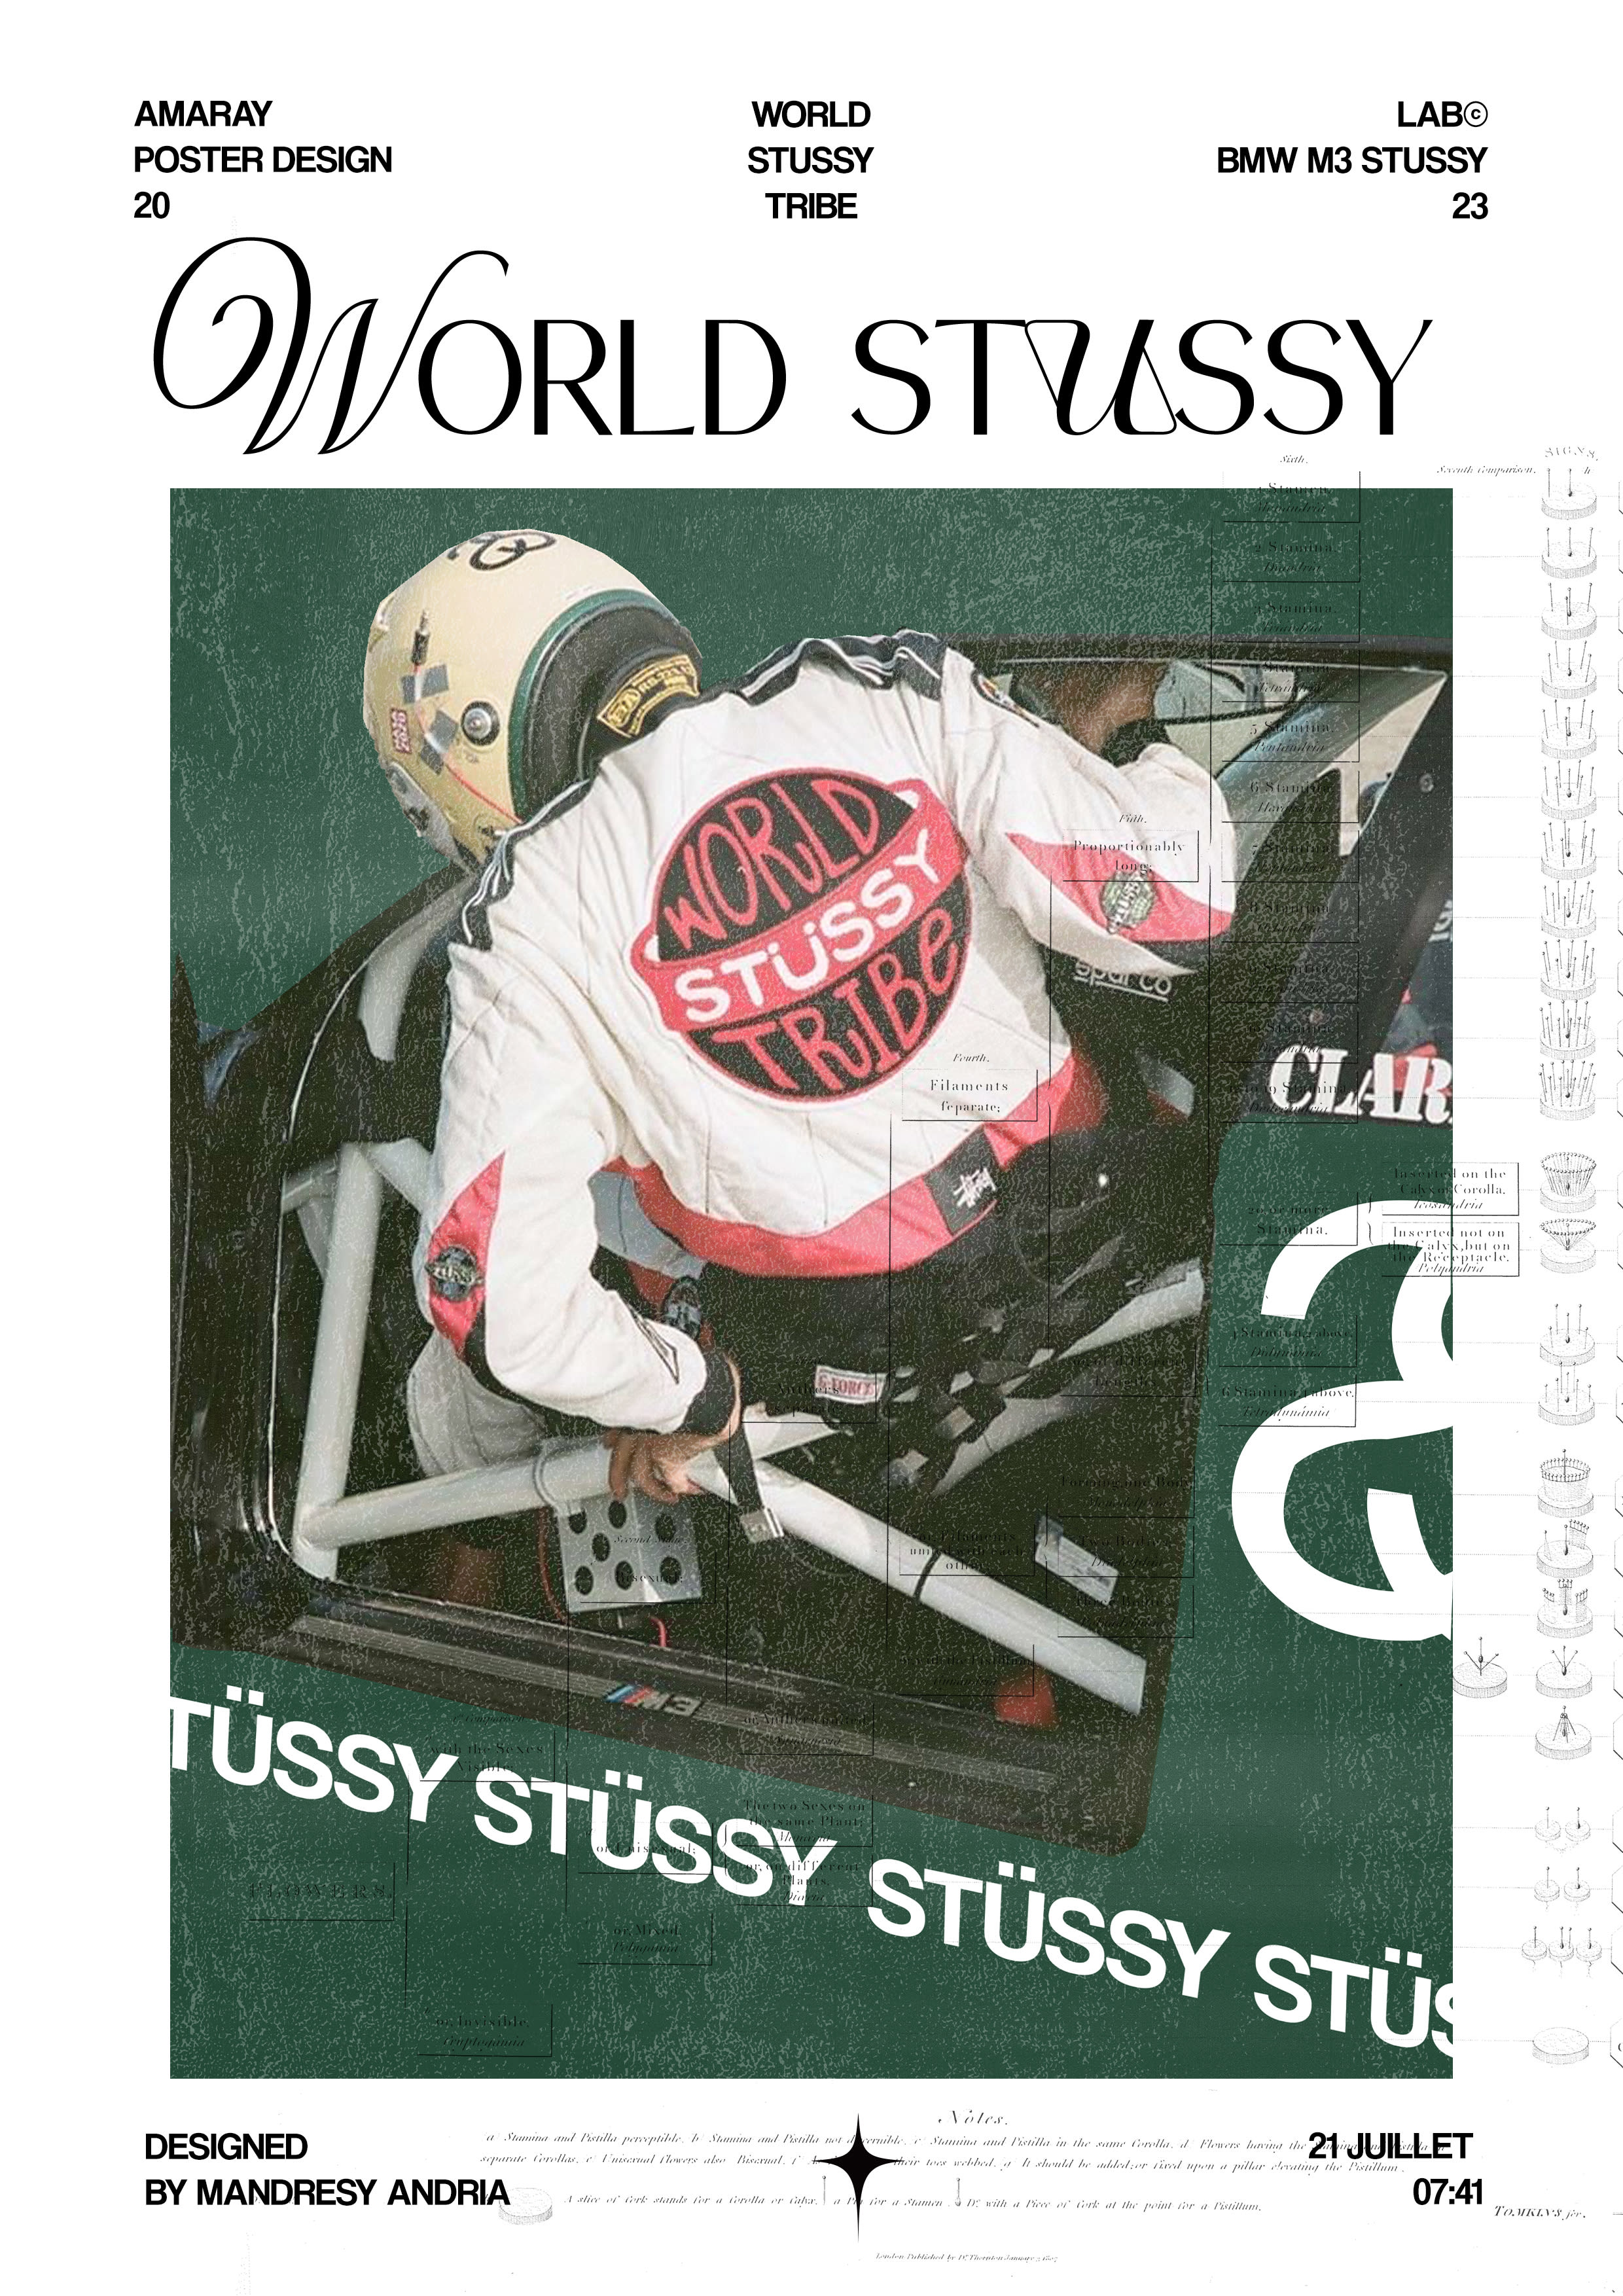 World Stüssy Tribe- Poster design by Mandresy Andriahenintsoa